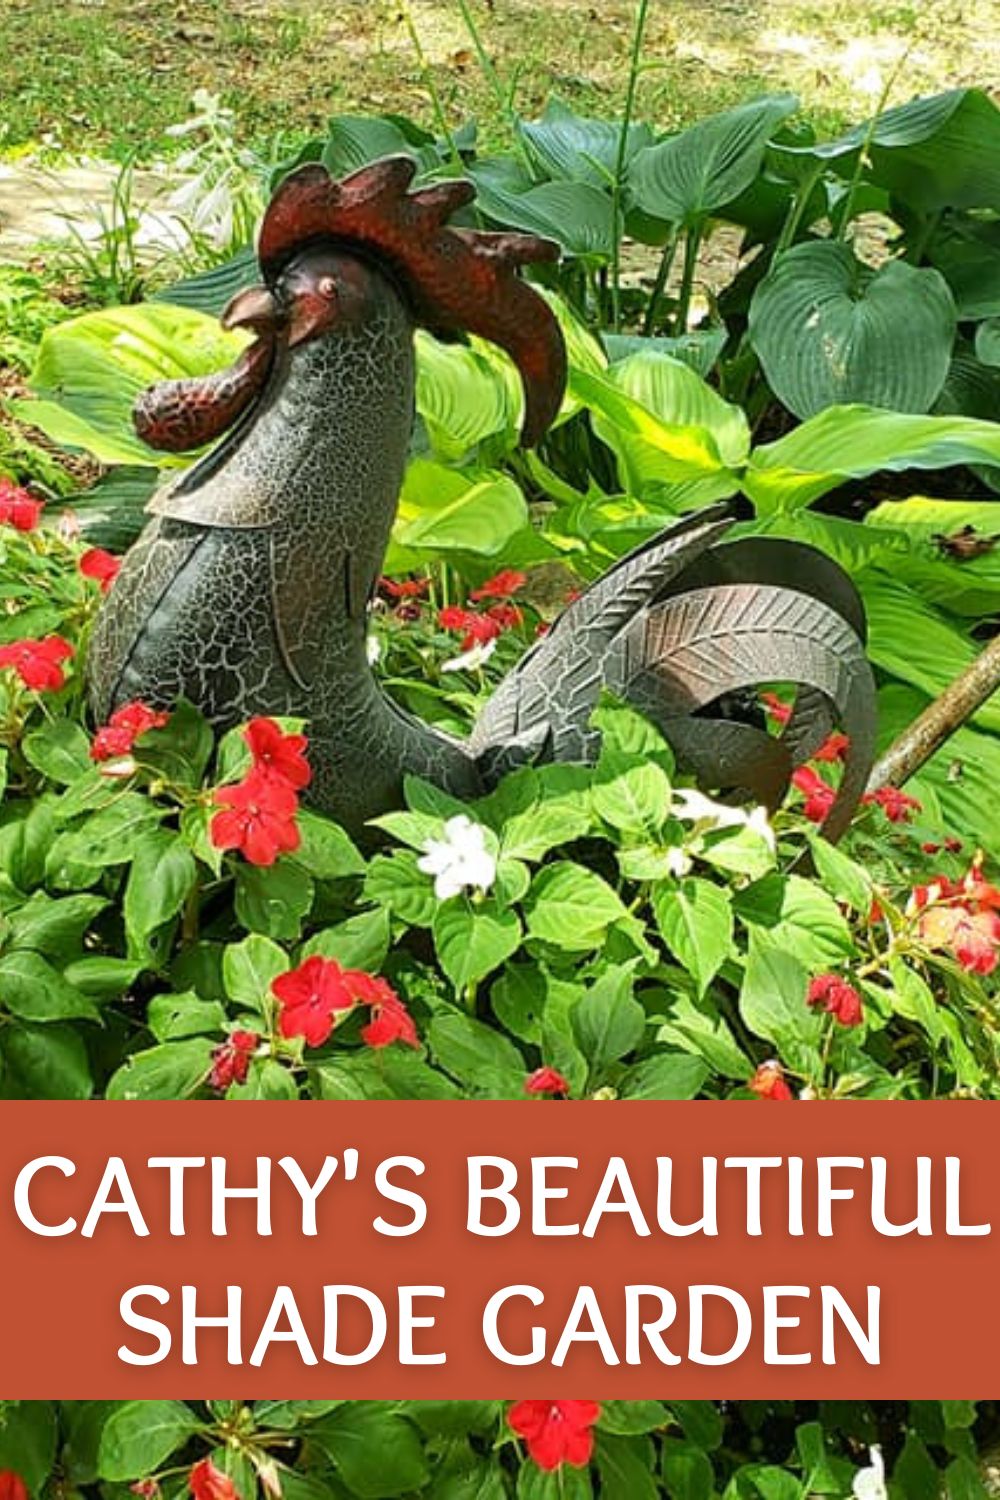 Cathy's beautiful shade garden